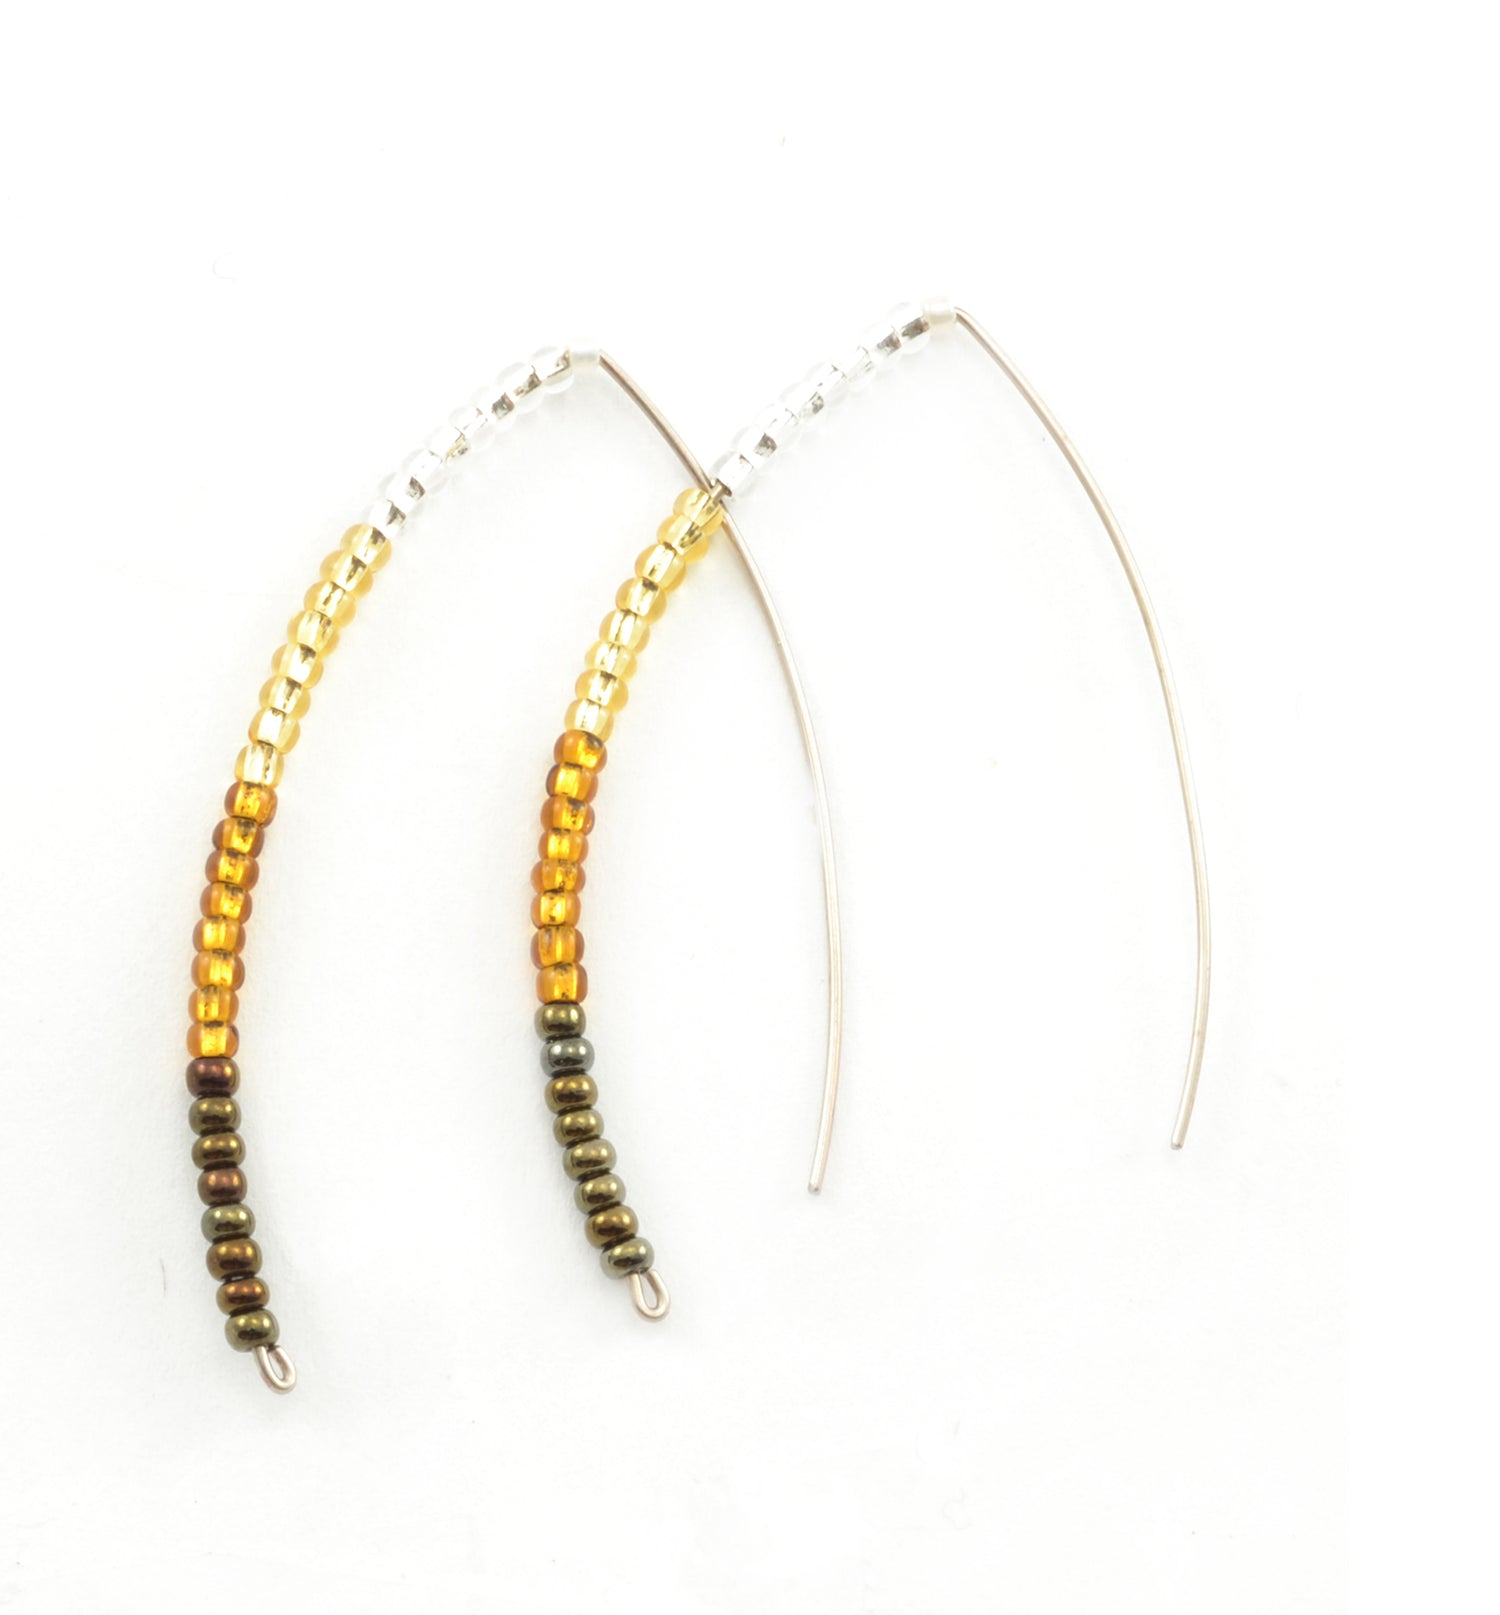 Lucia's World Emporium Fair Trade Handmade Beaded Styx Earrings from Guatemala in Gold